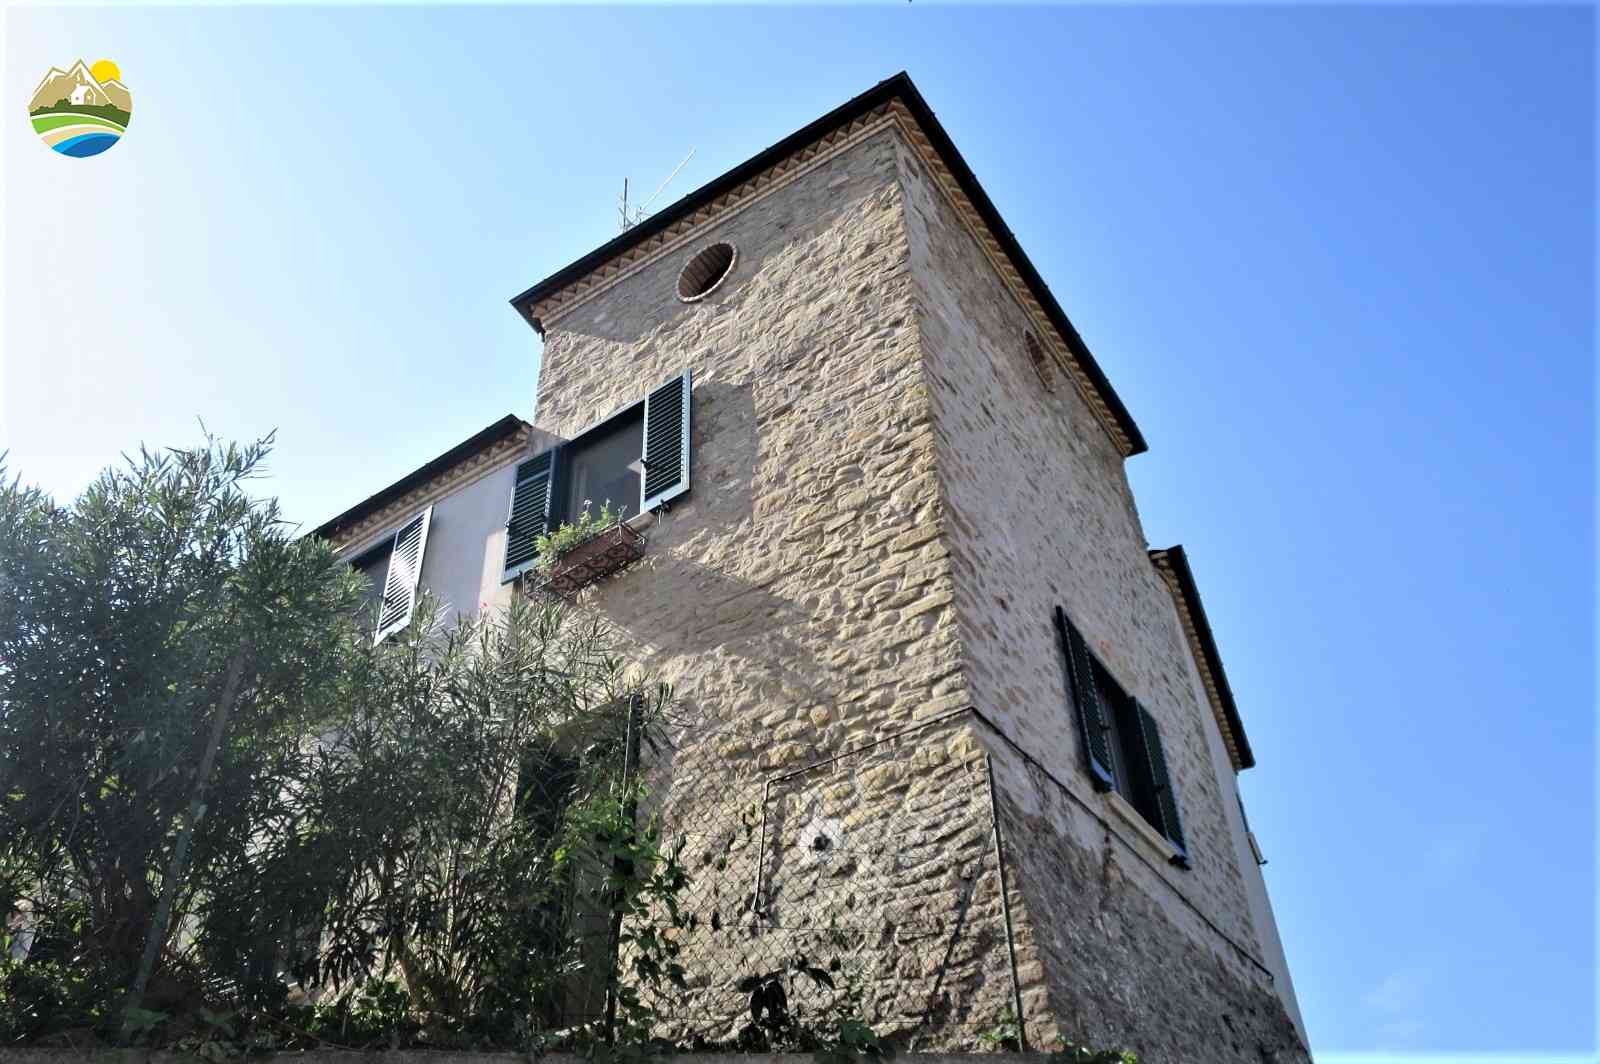 Townhouse Townhouse for sale Cellino Attanasio (TE), La Vecchia Torre - Cellino Attanasio - EUR 230.588 10